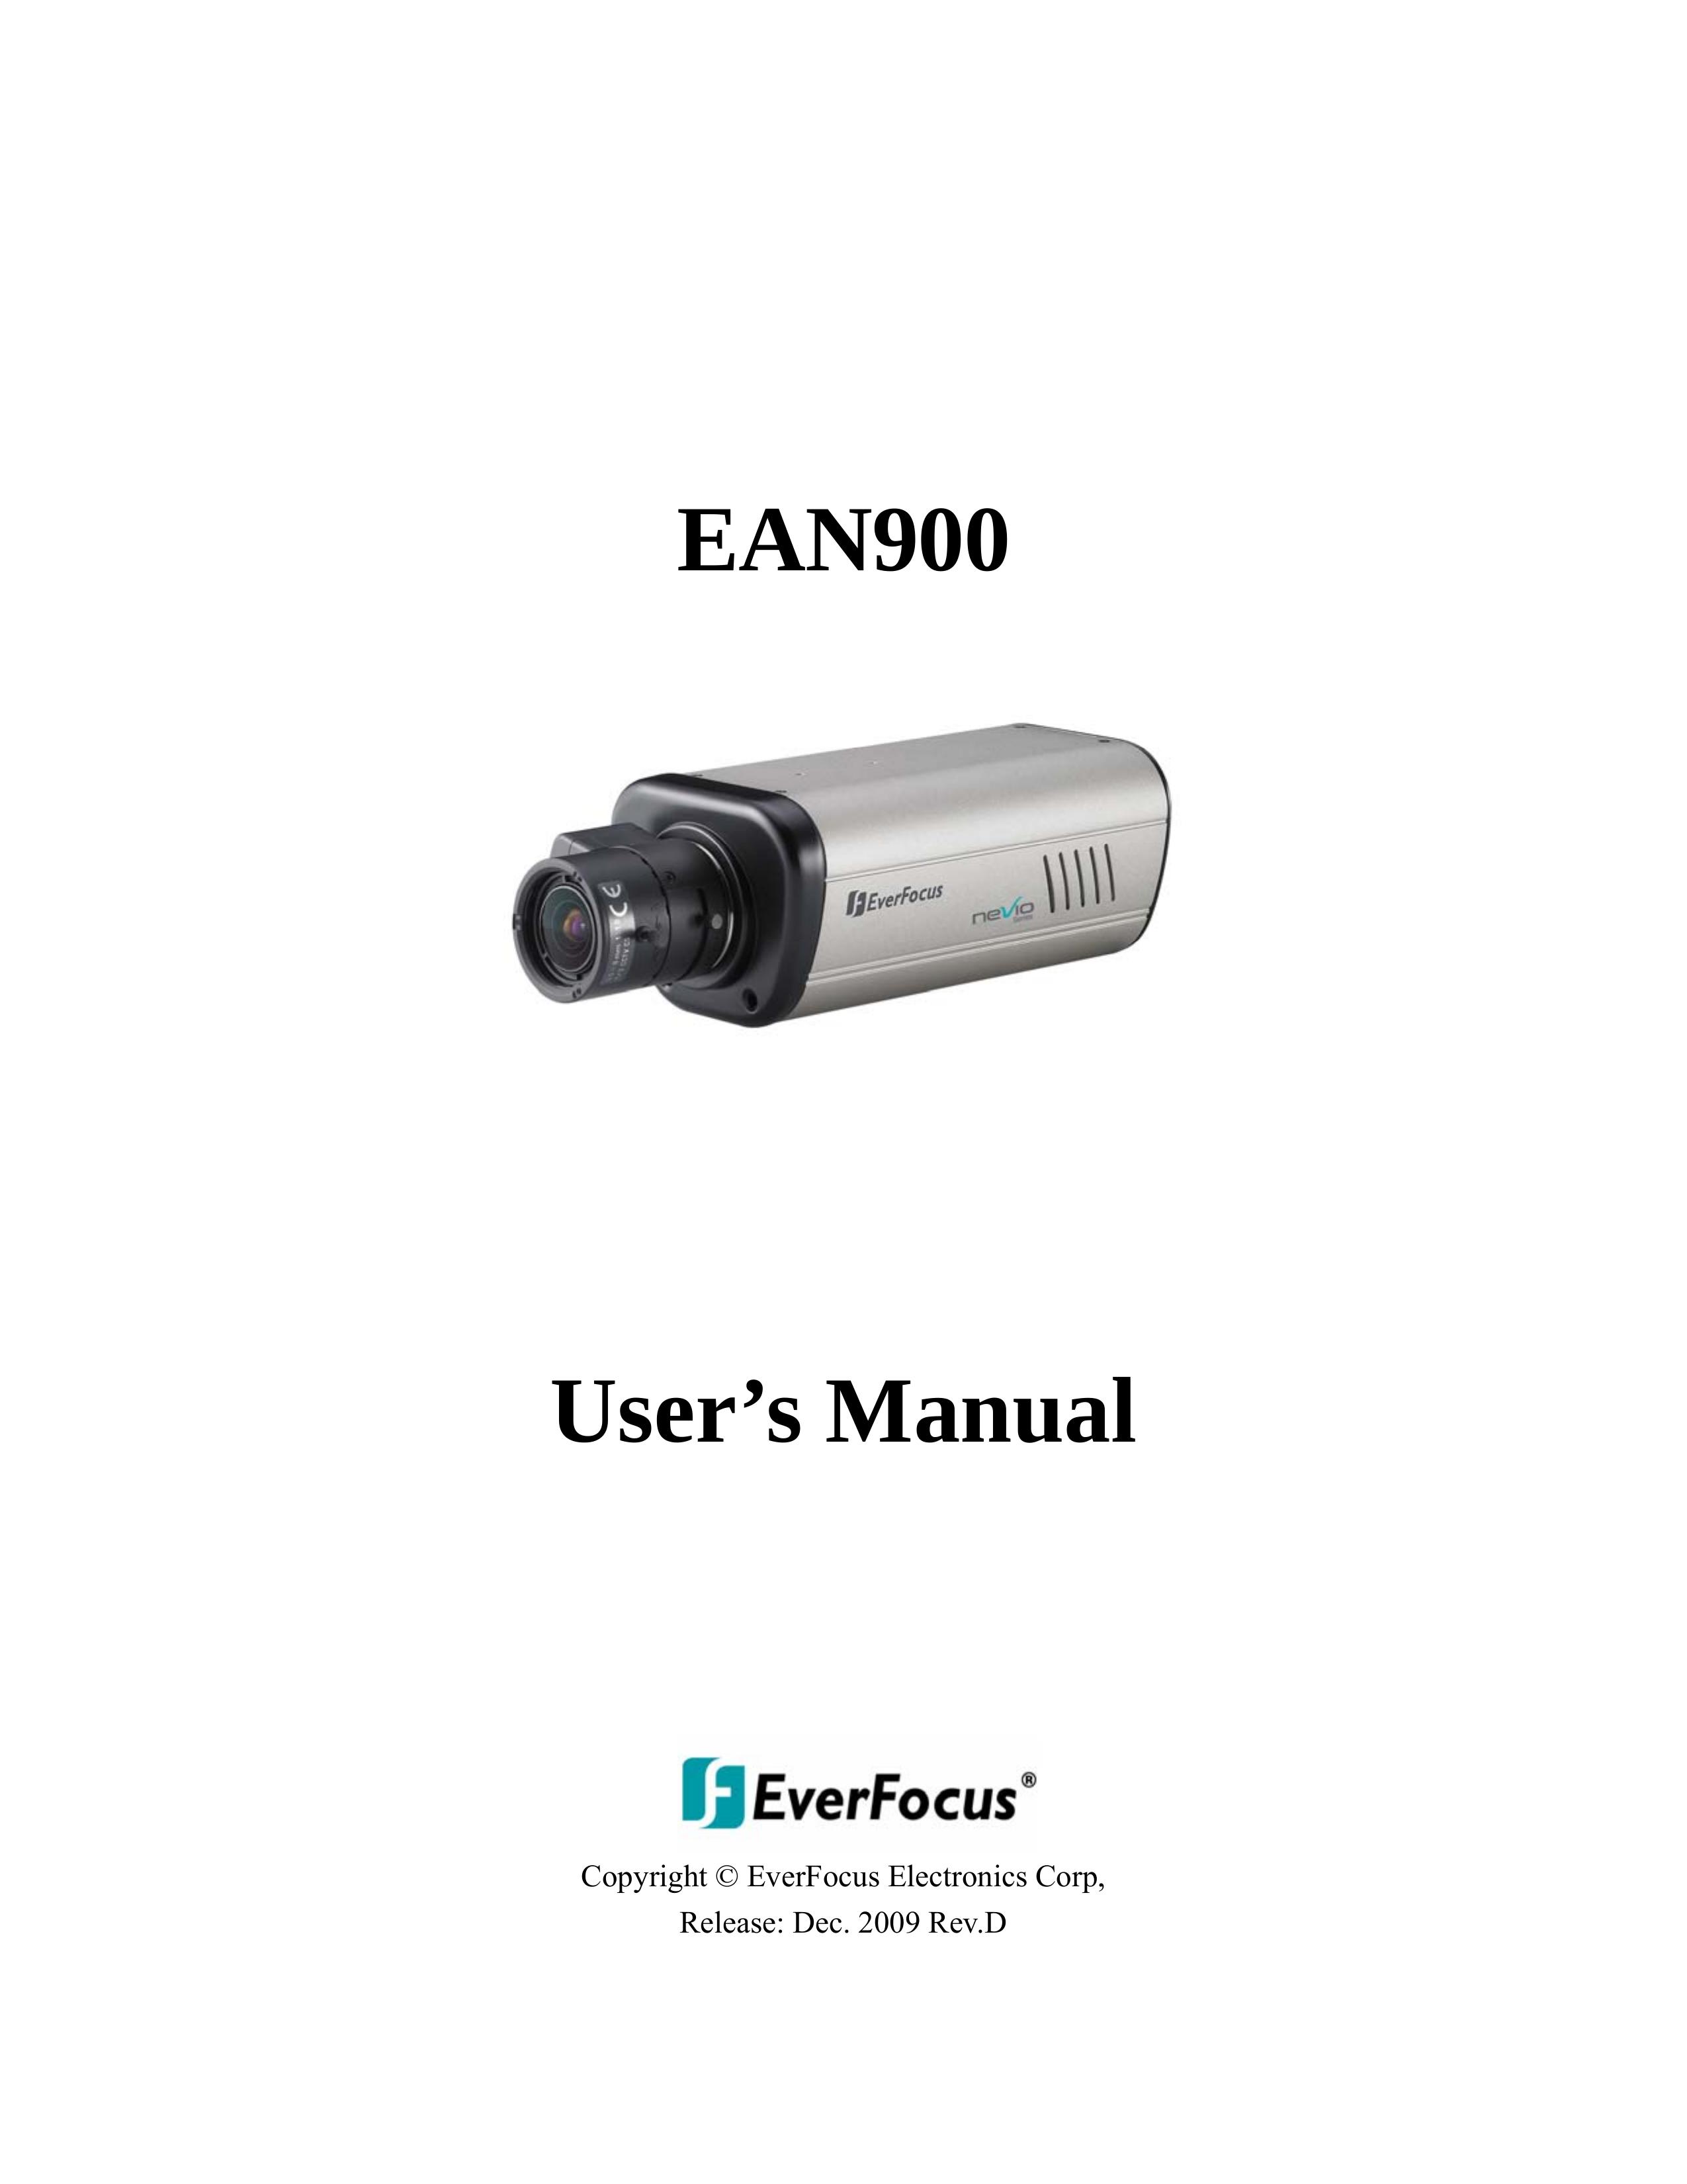 EverFocus EAN900 Security Camera User Manual